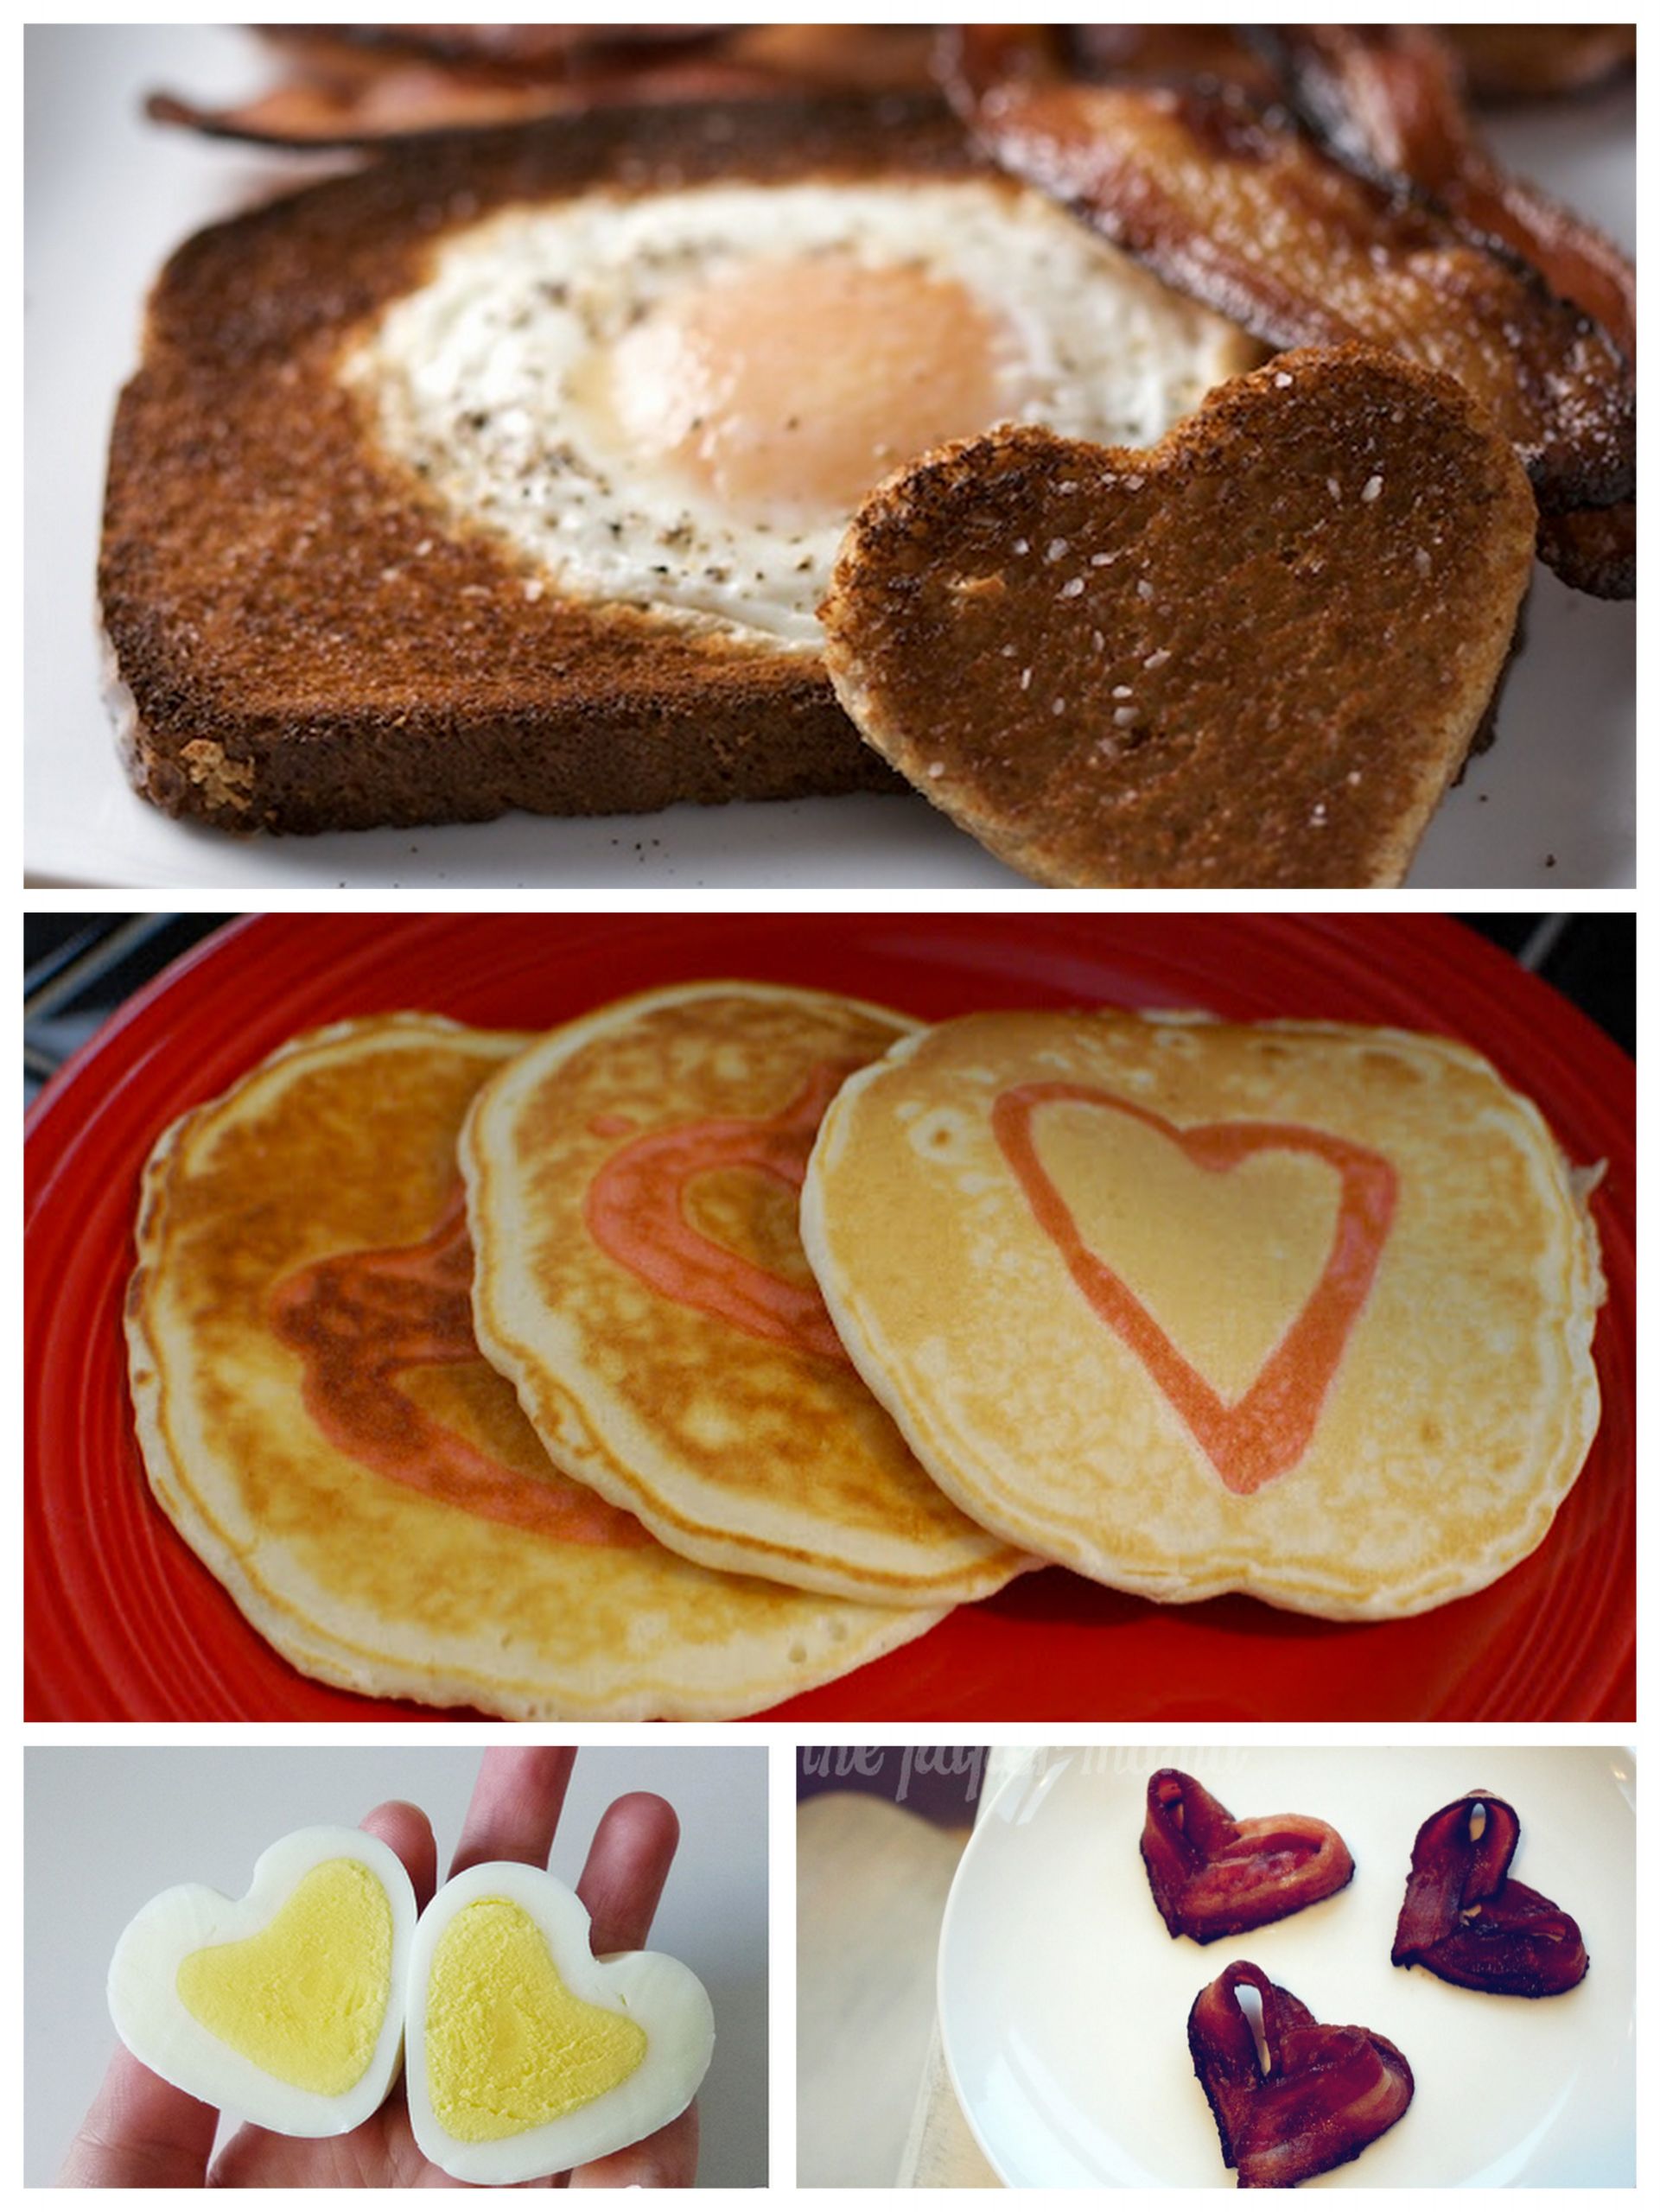 Valentines Day Food Idea
 Valentine’s Day Food Ideas